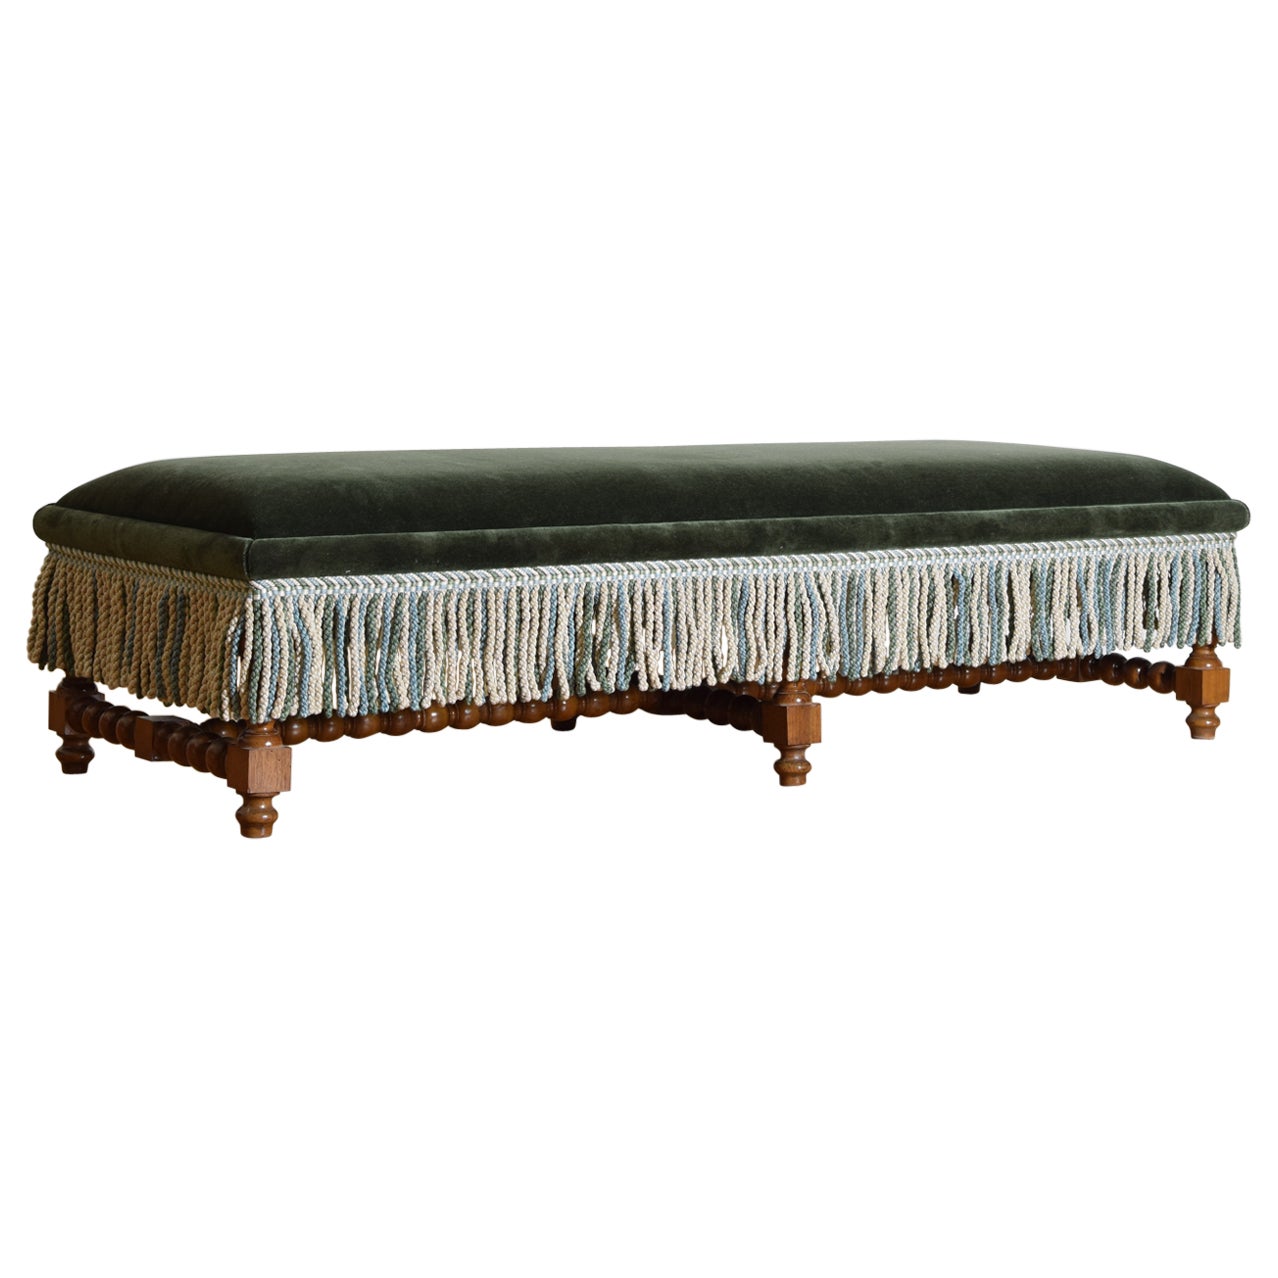 Italian Louis XIII Style Light Walnut & Upholstered Large Bench, 2nd half 19thc